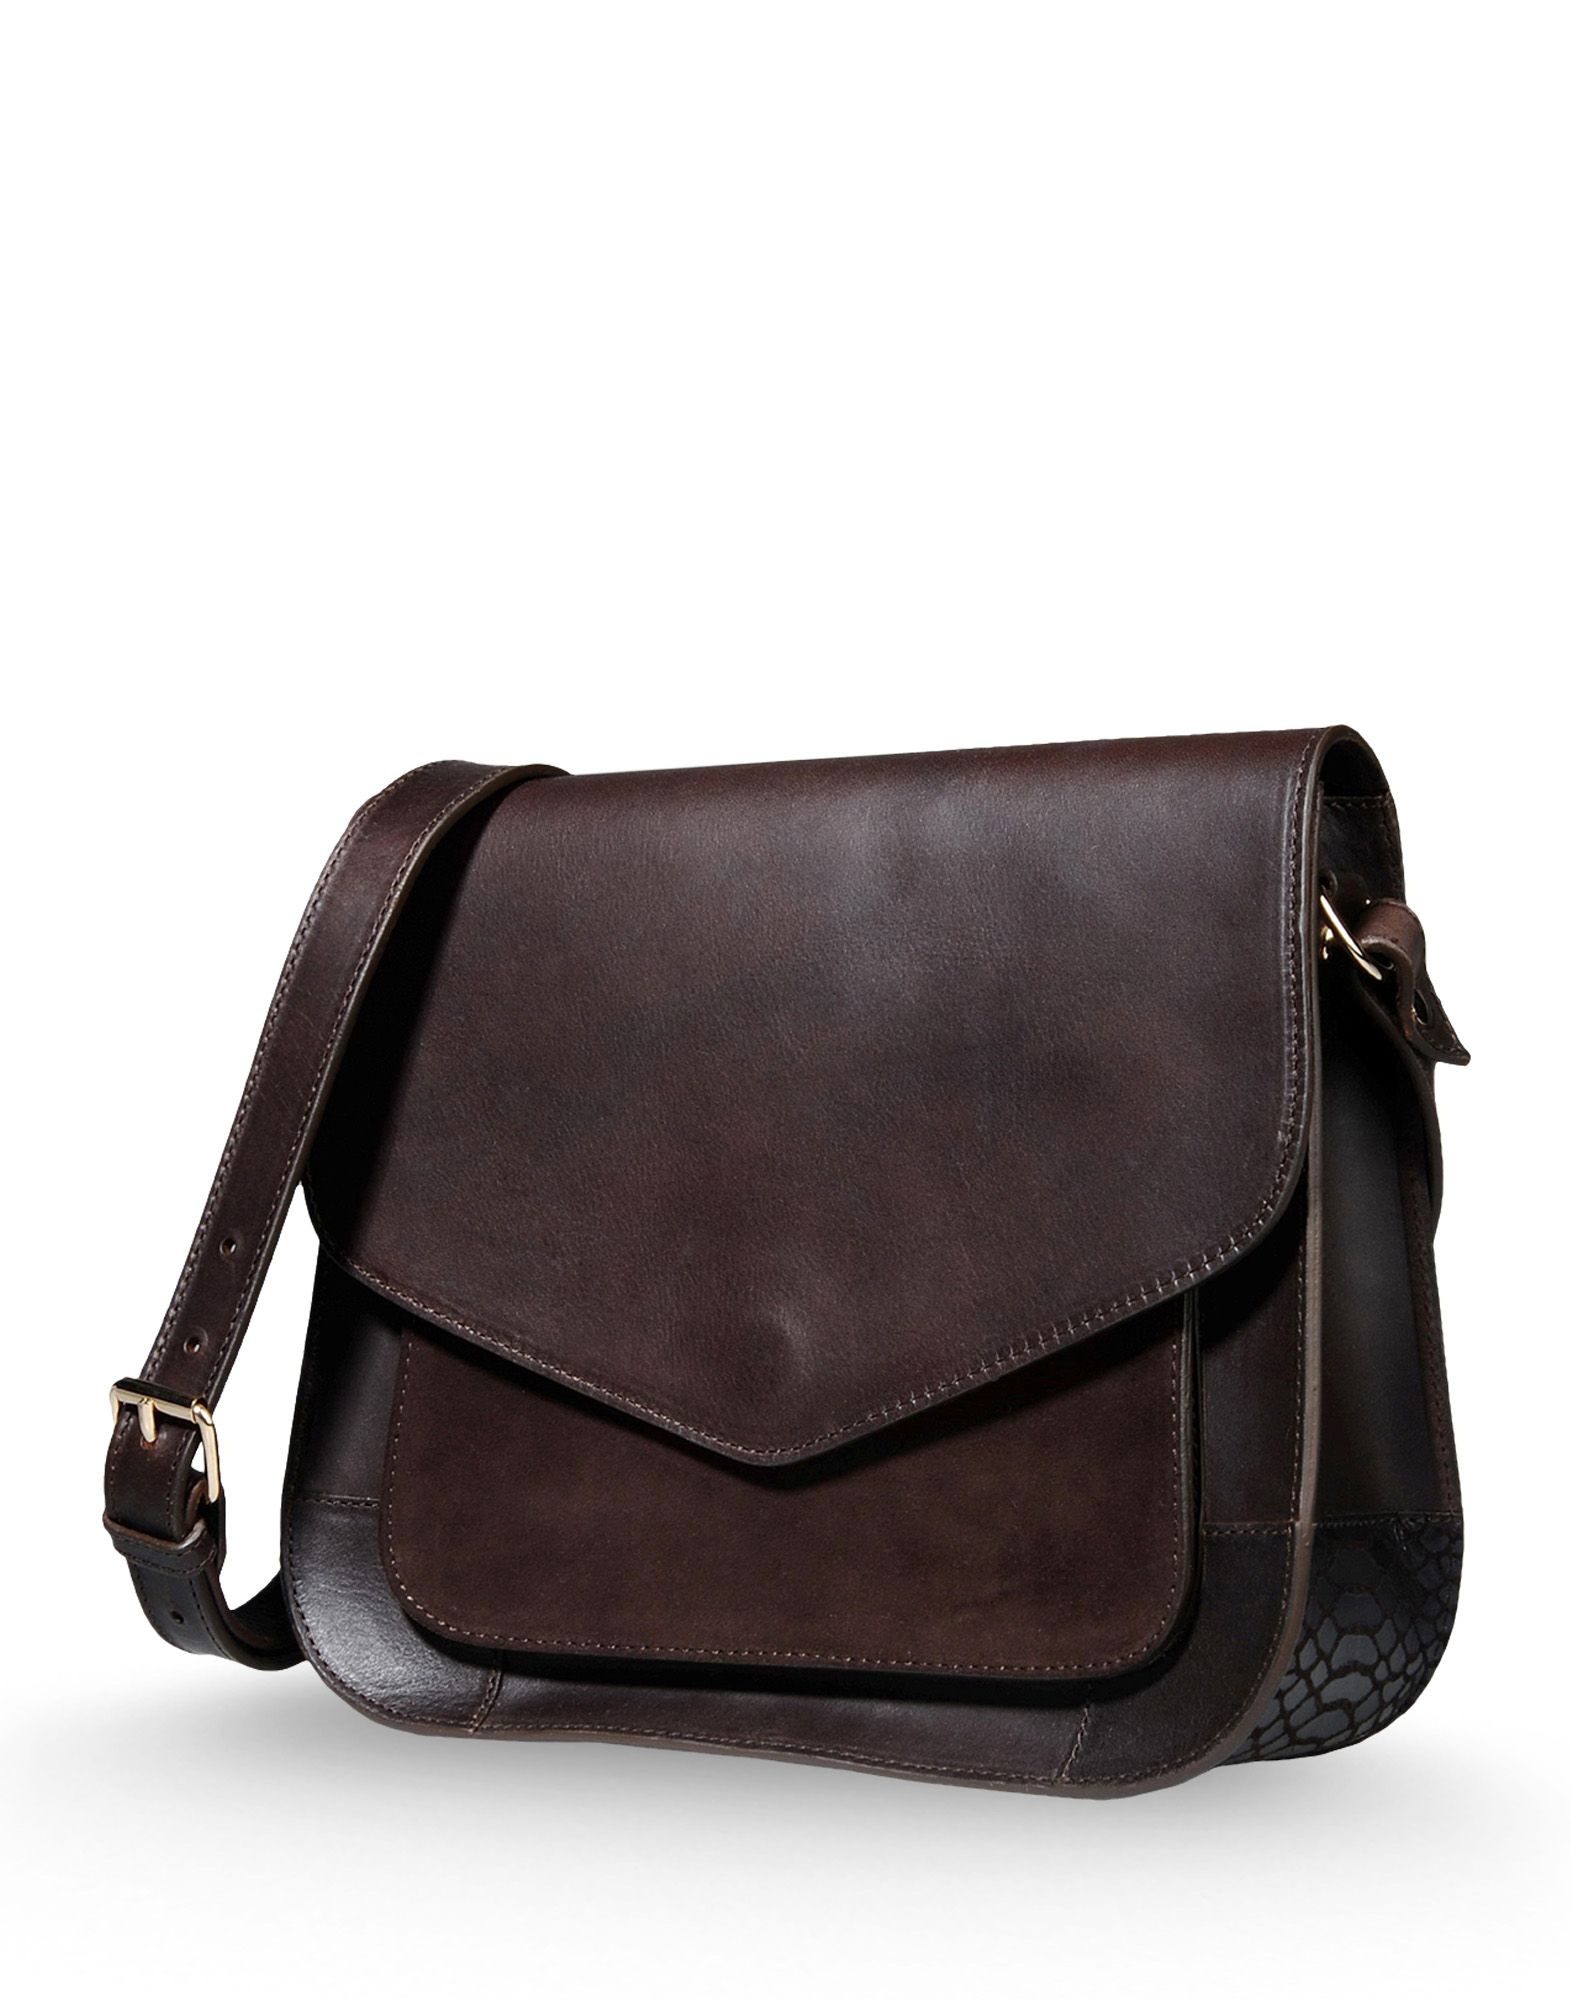 A.p.c. Medium Leather Bag in Brown (Dark brown) | Lyst